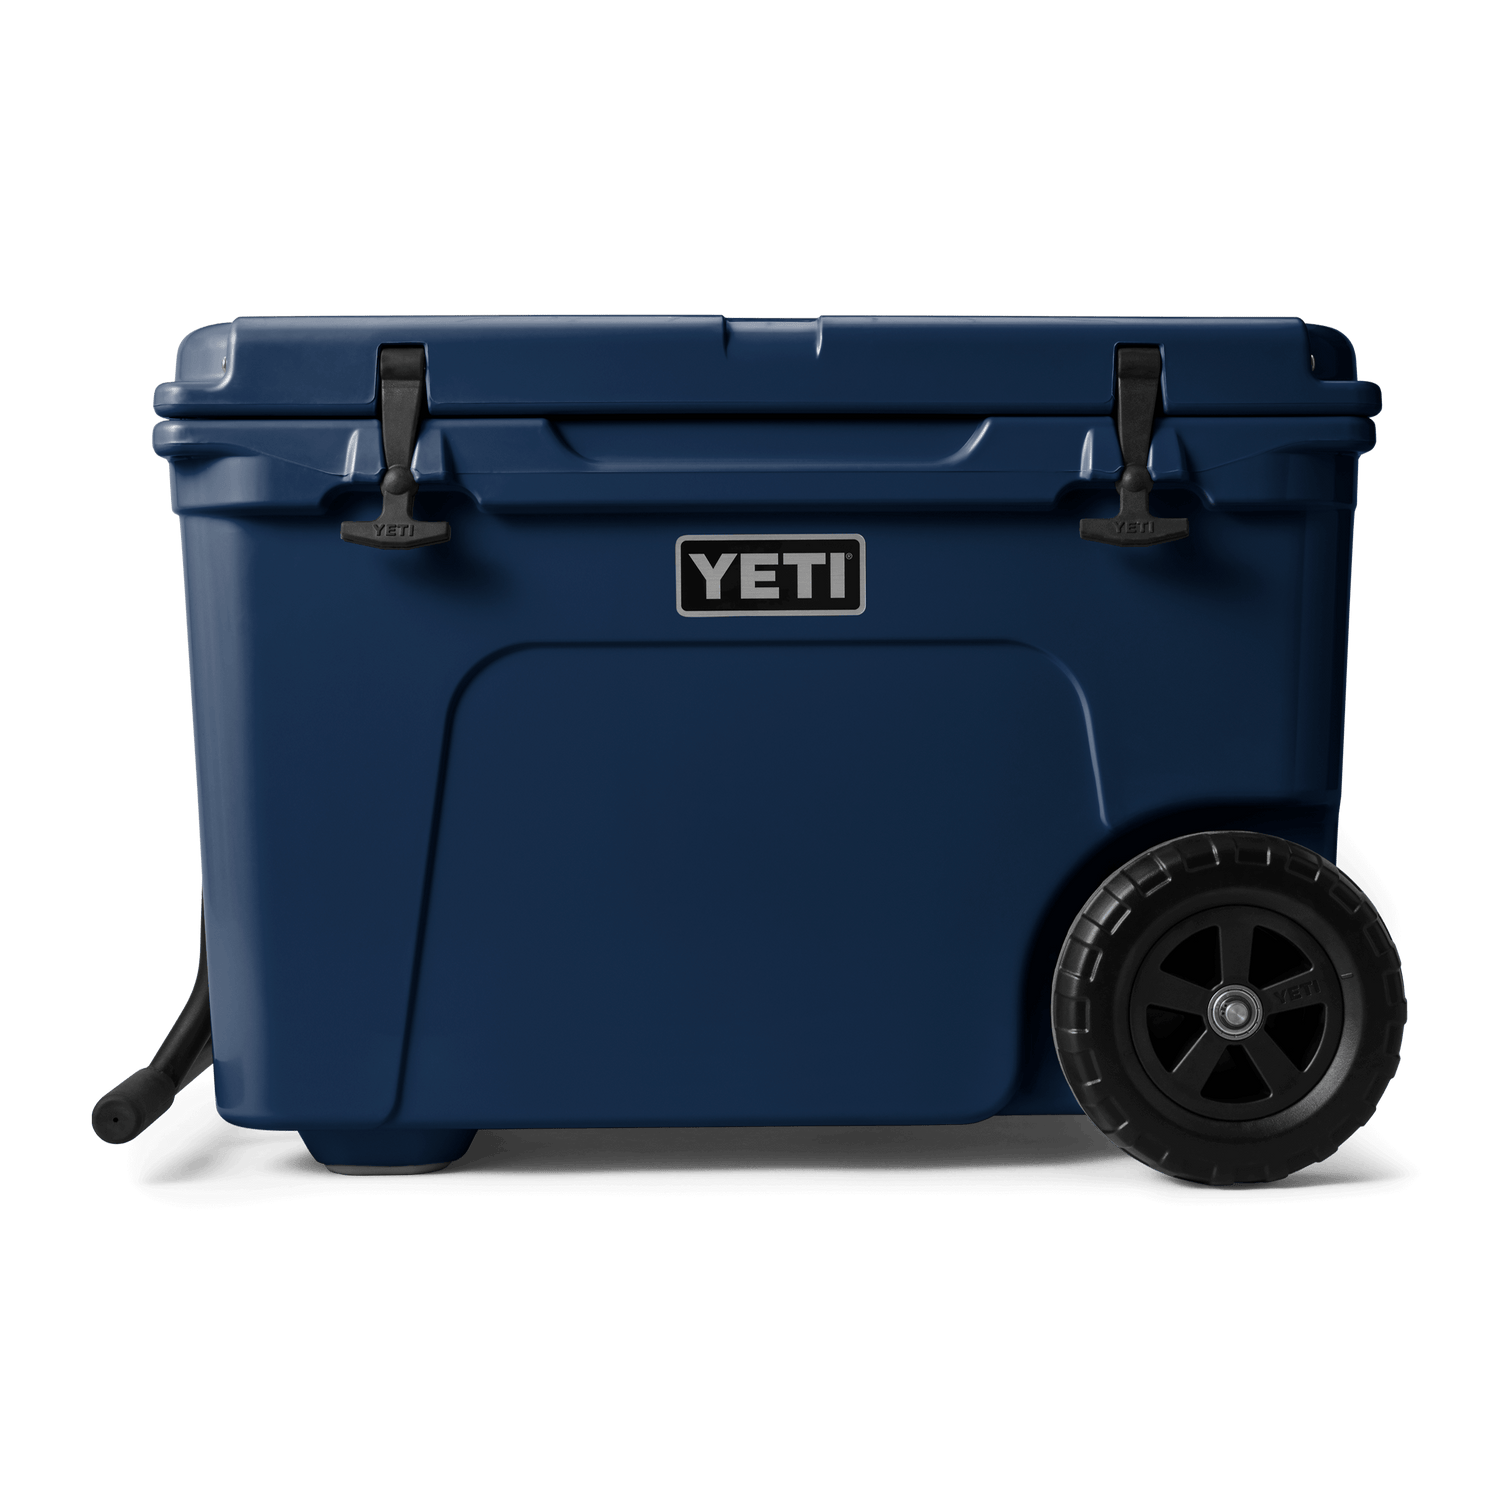 YETI / Tundra 35 Hard Cooler - Navy